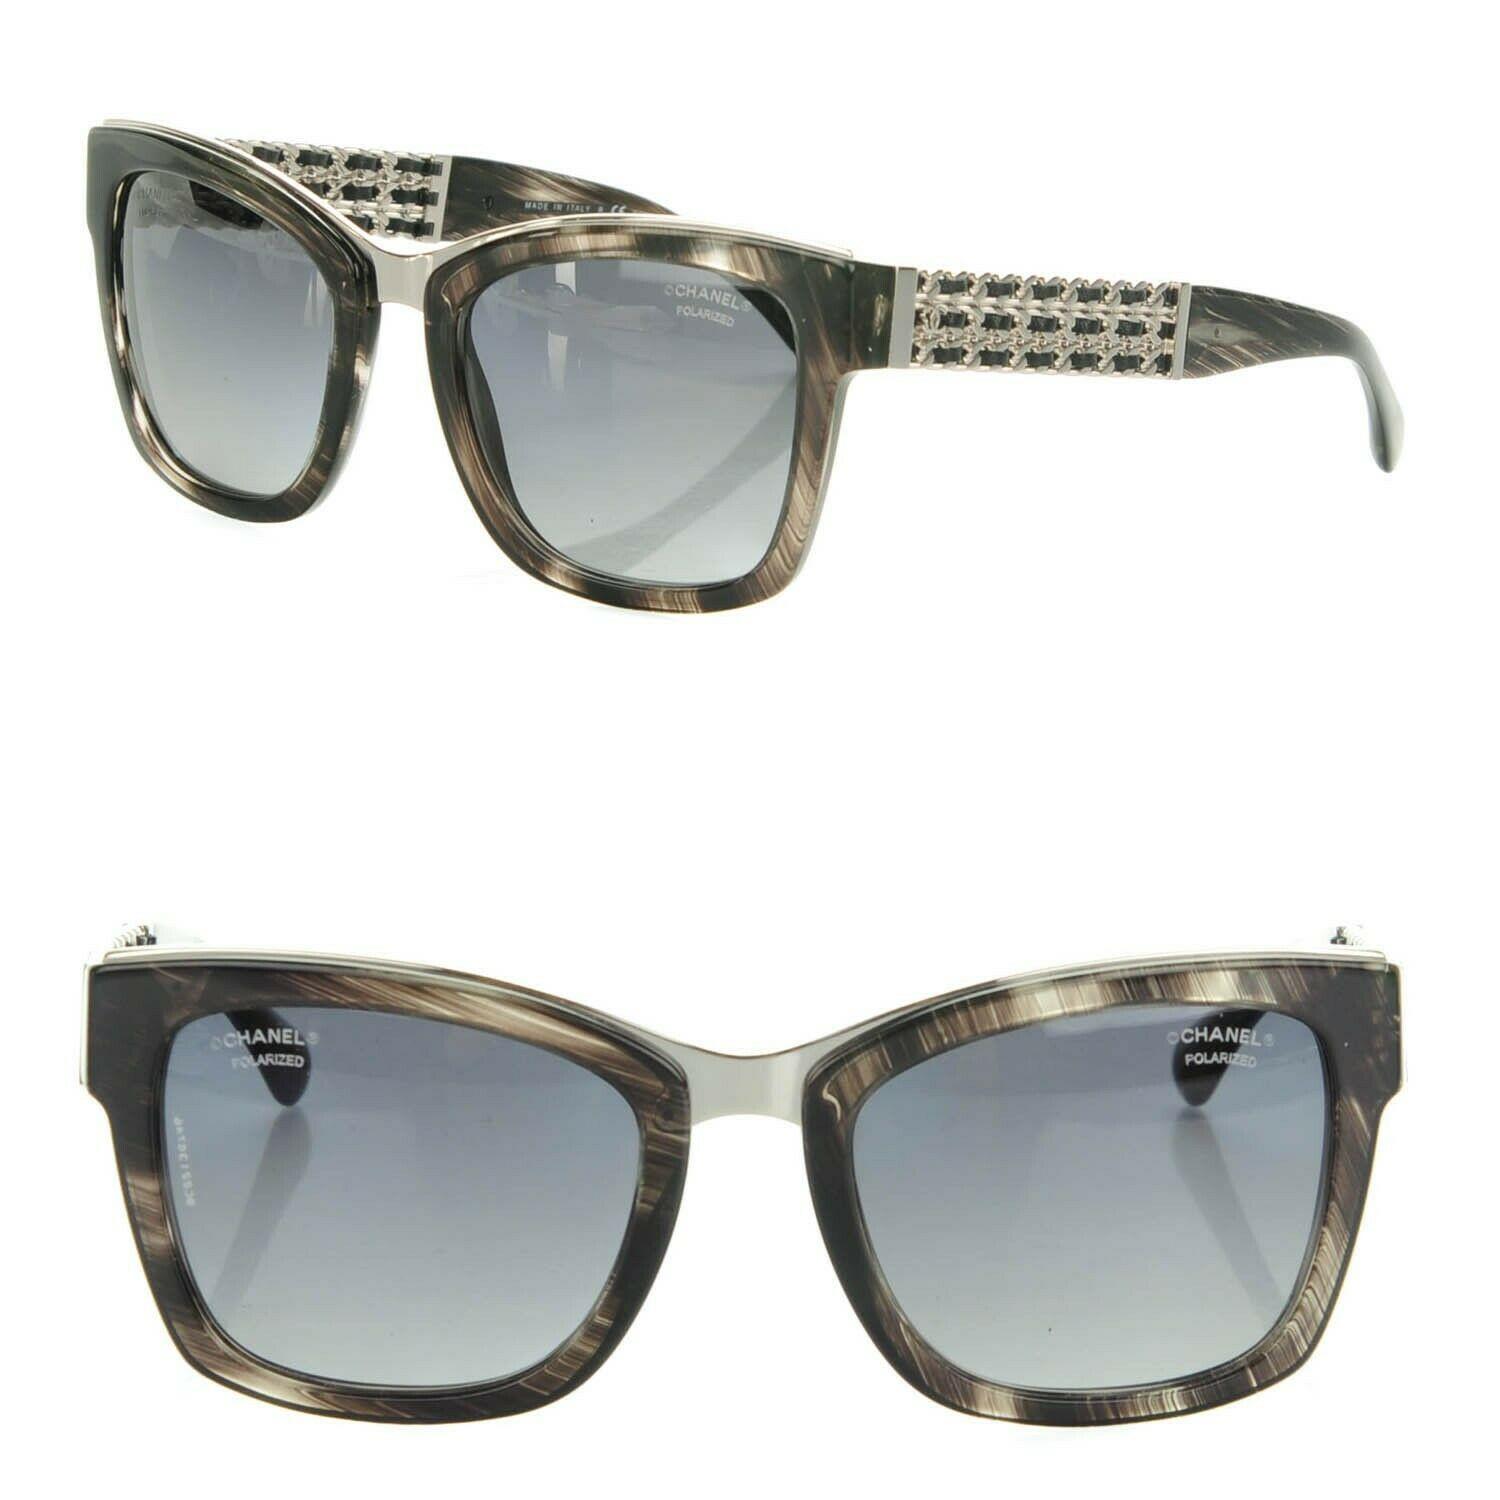 Chanel Sunglasses 5362 - Q A 1574/S8 53mm Frame